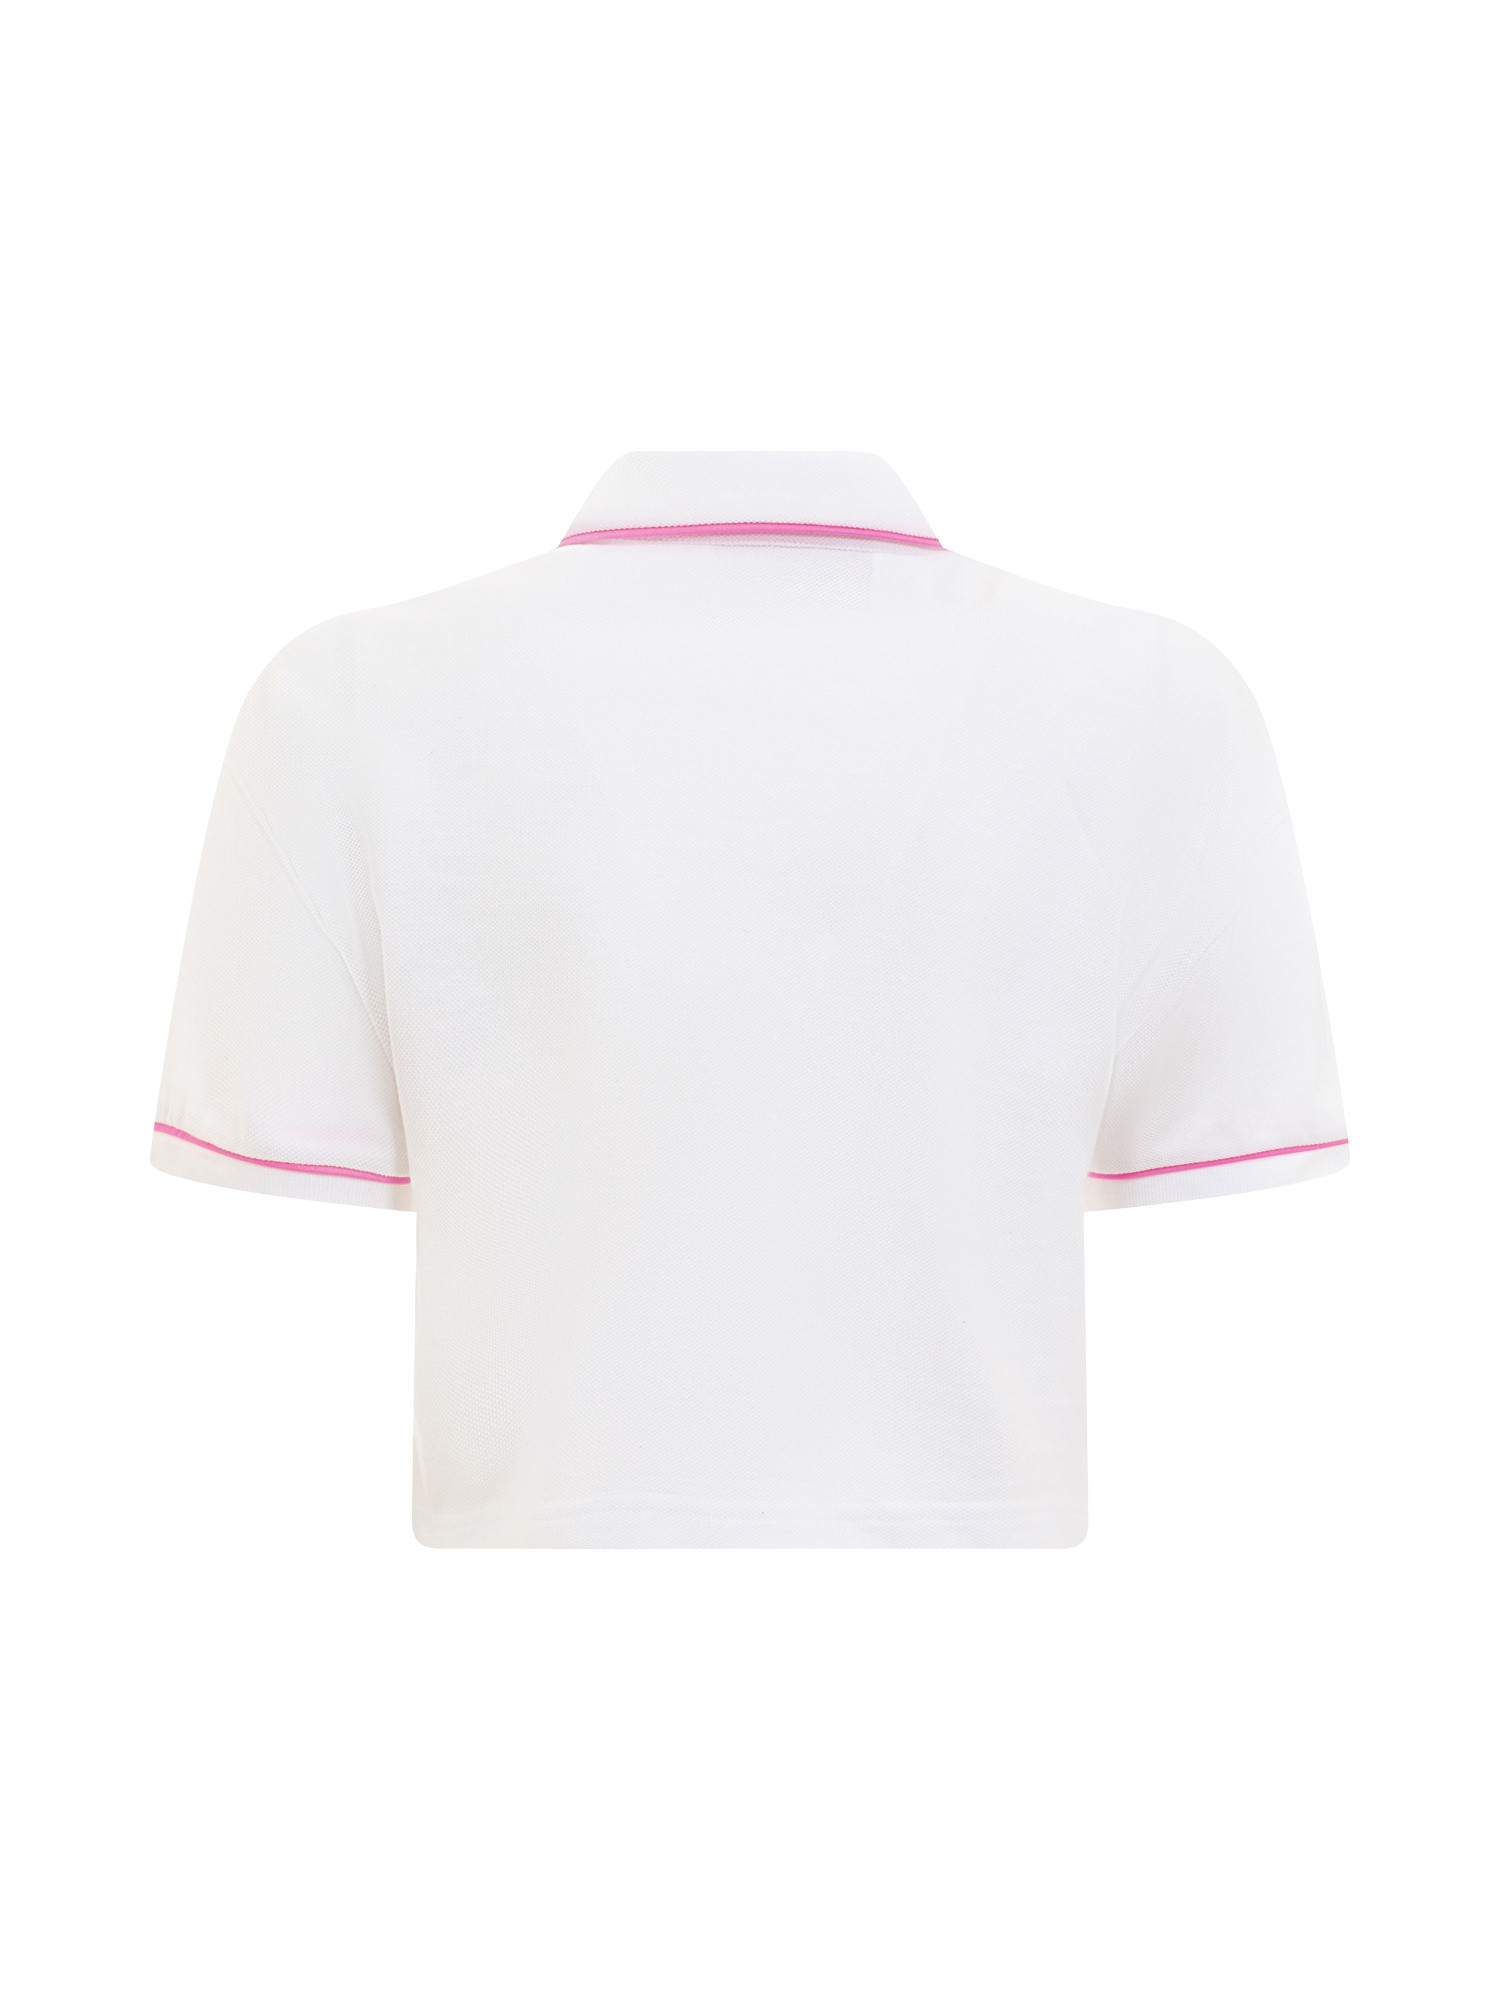 Chiara Ferragni - Cropped polo shirt, White, large image number 1